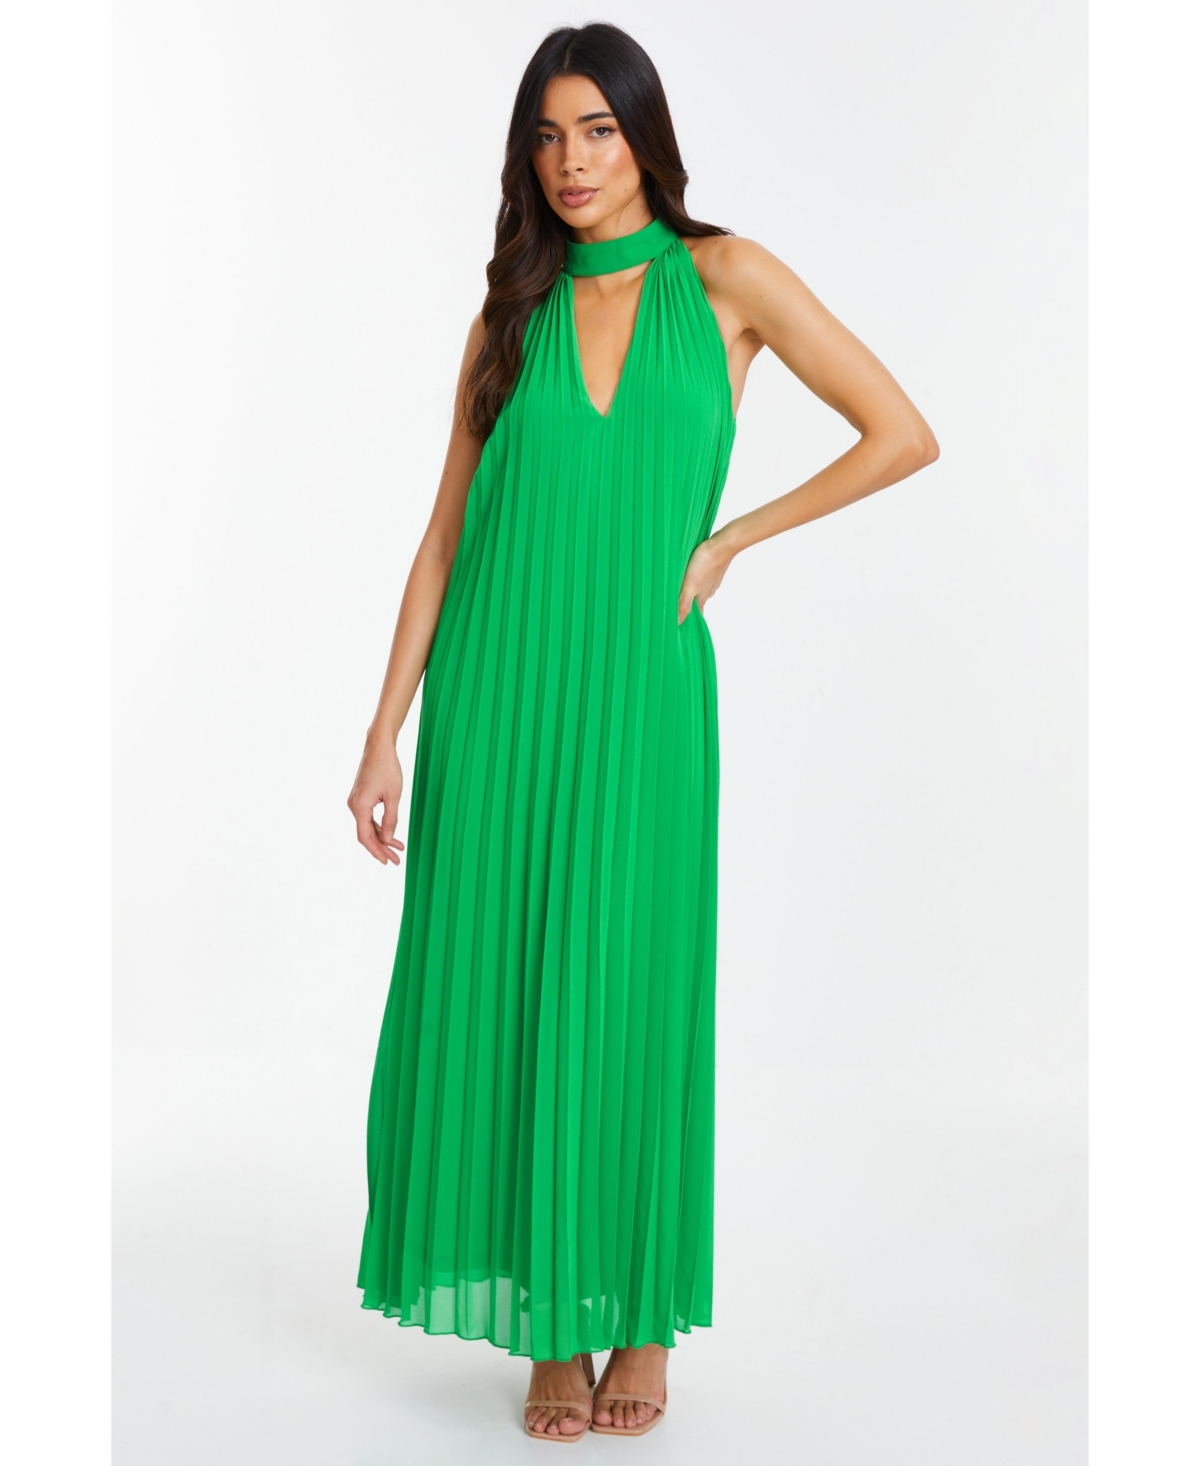 Women's Chiffon Pleated High Neck Midi Dress - Green